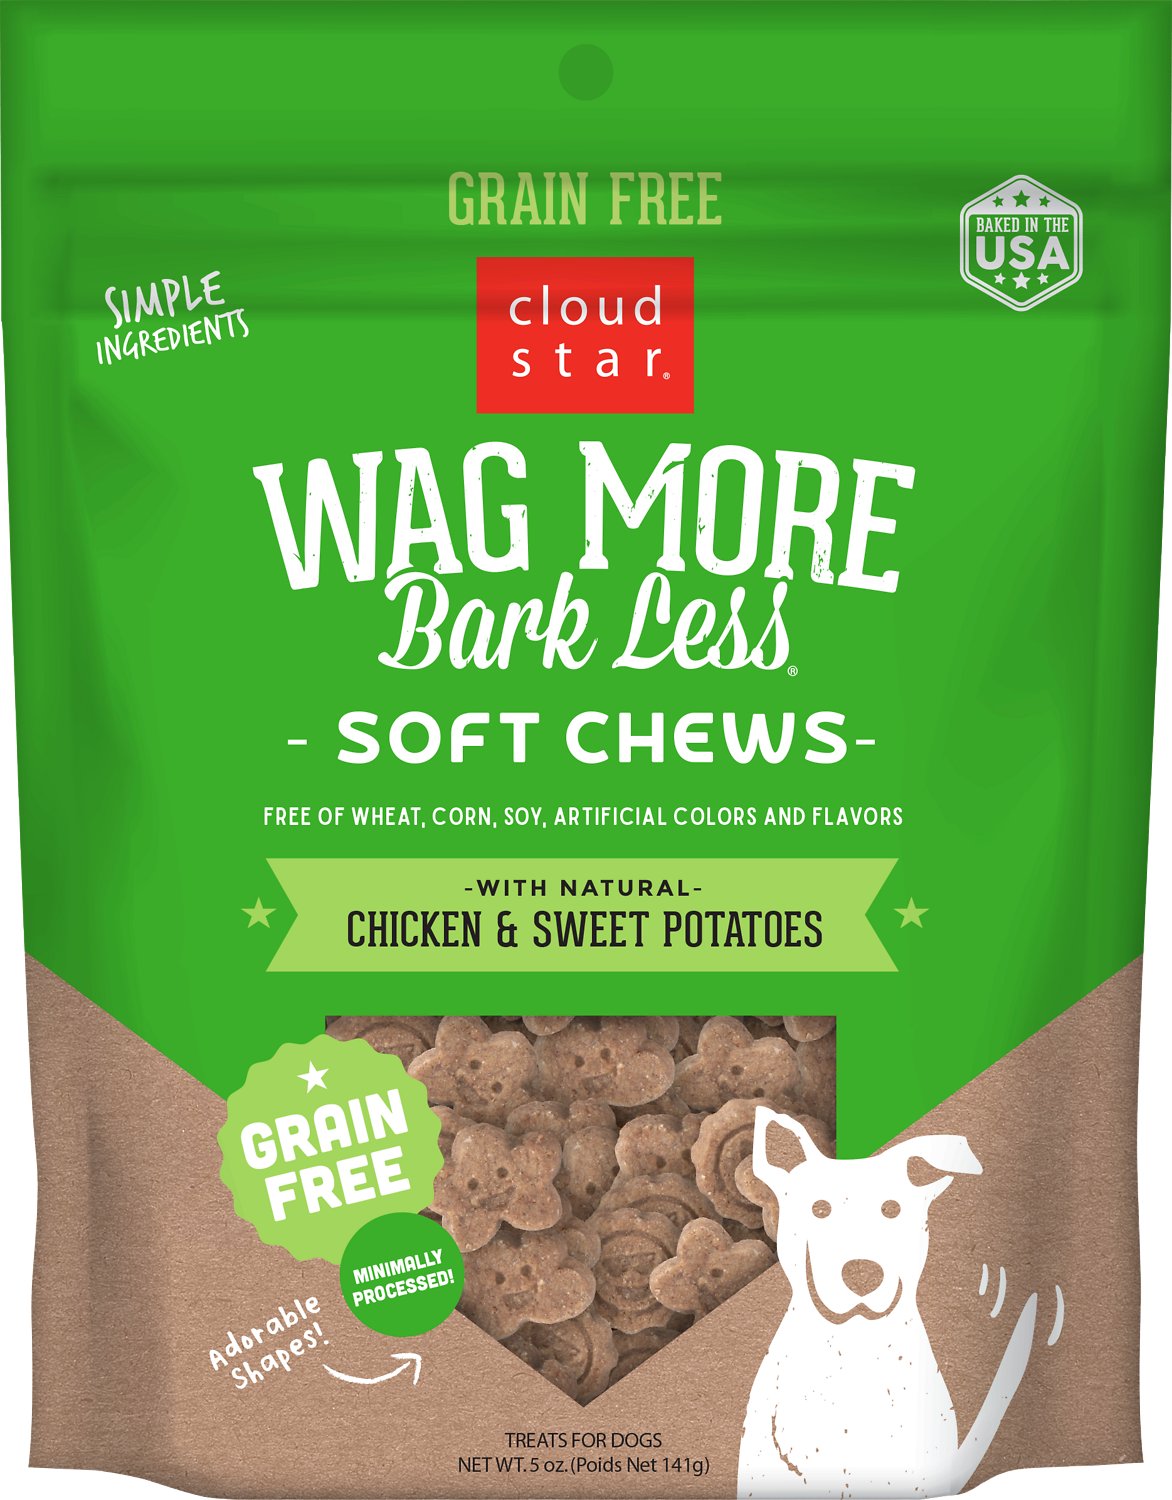 Wag more bark less soft chews 5oz. (chicken & sweet potato)